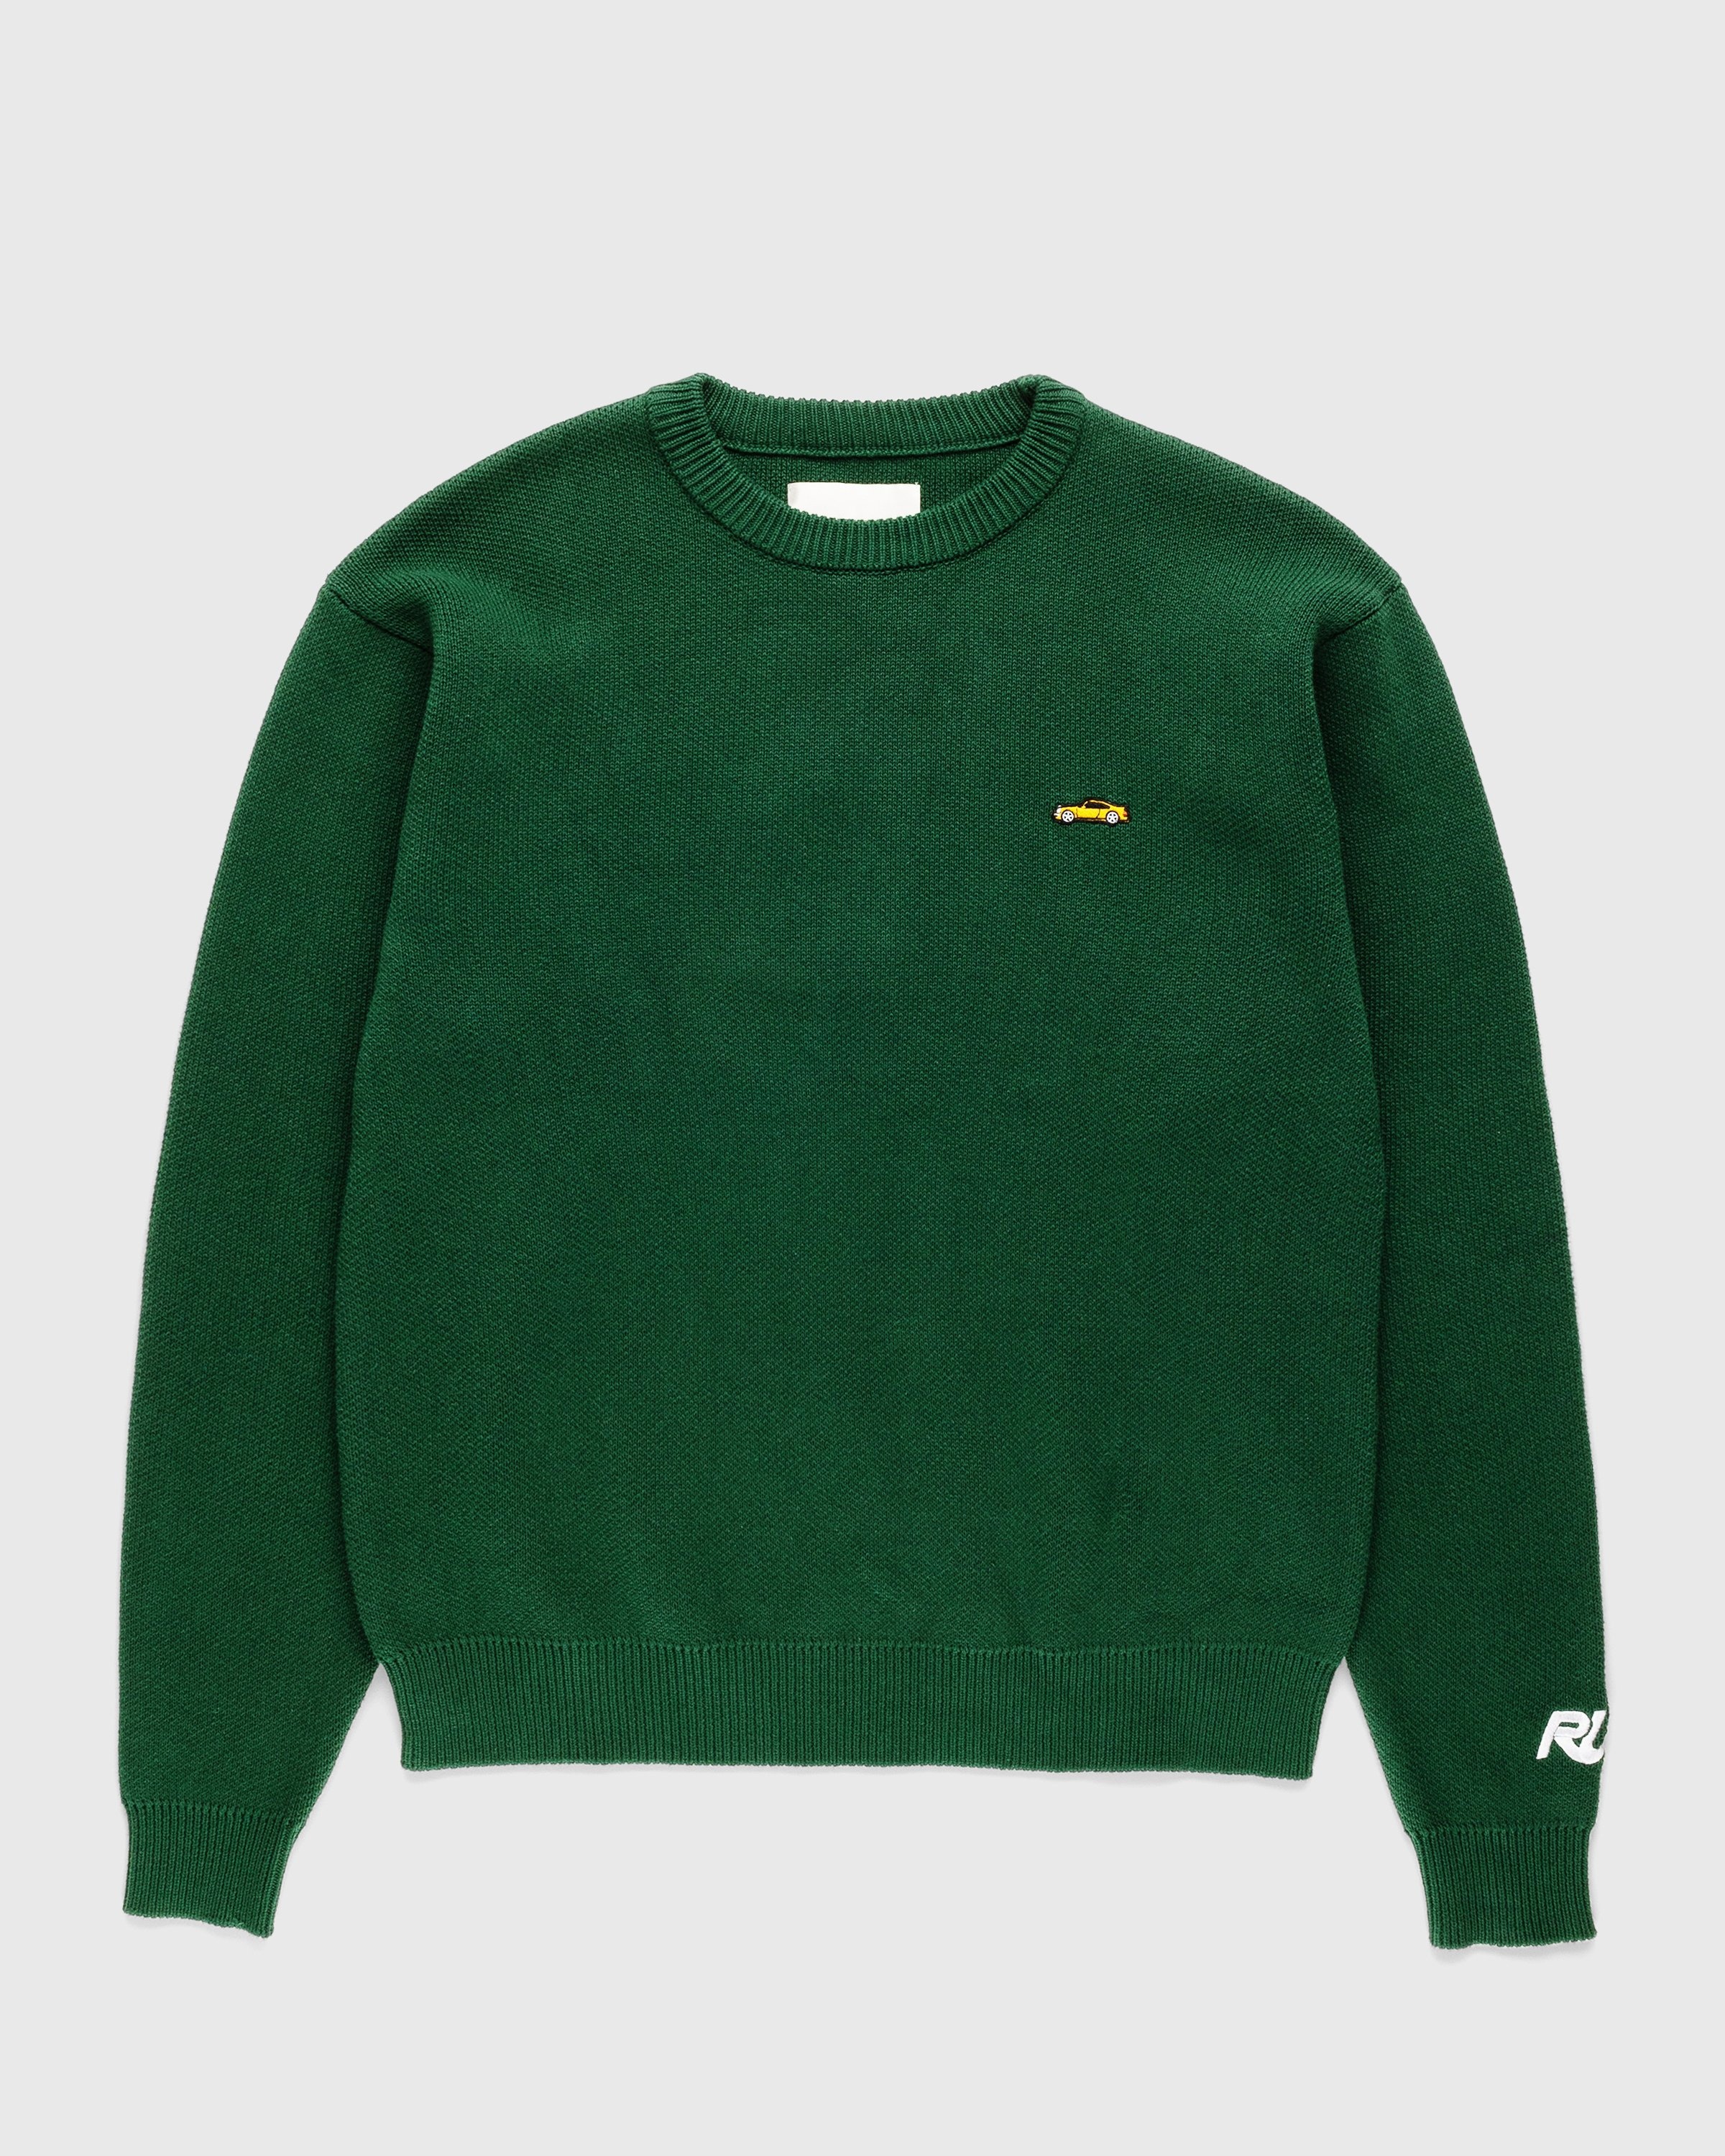 RUF x Highsnobiety – Knitted Crewneck Sweater Green - Crewnecks - Green - Image 1